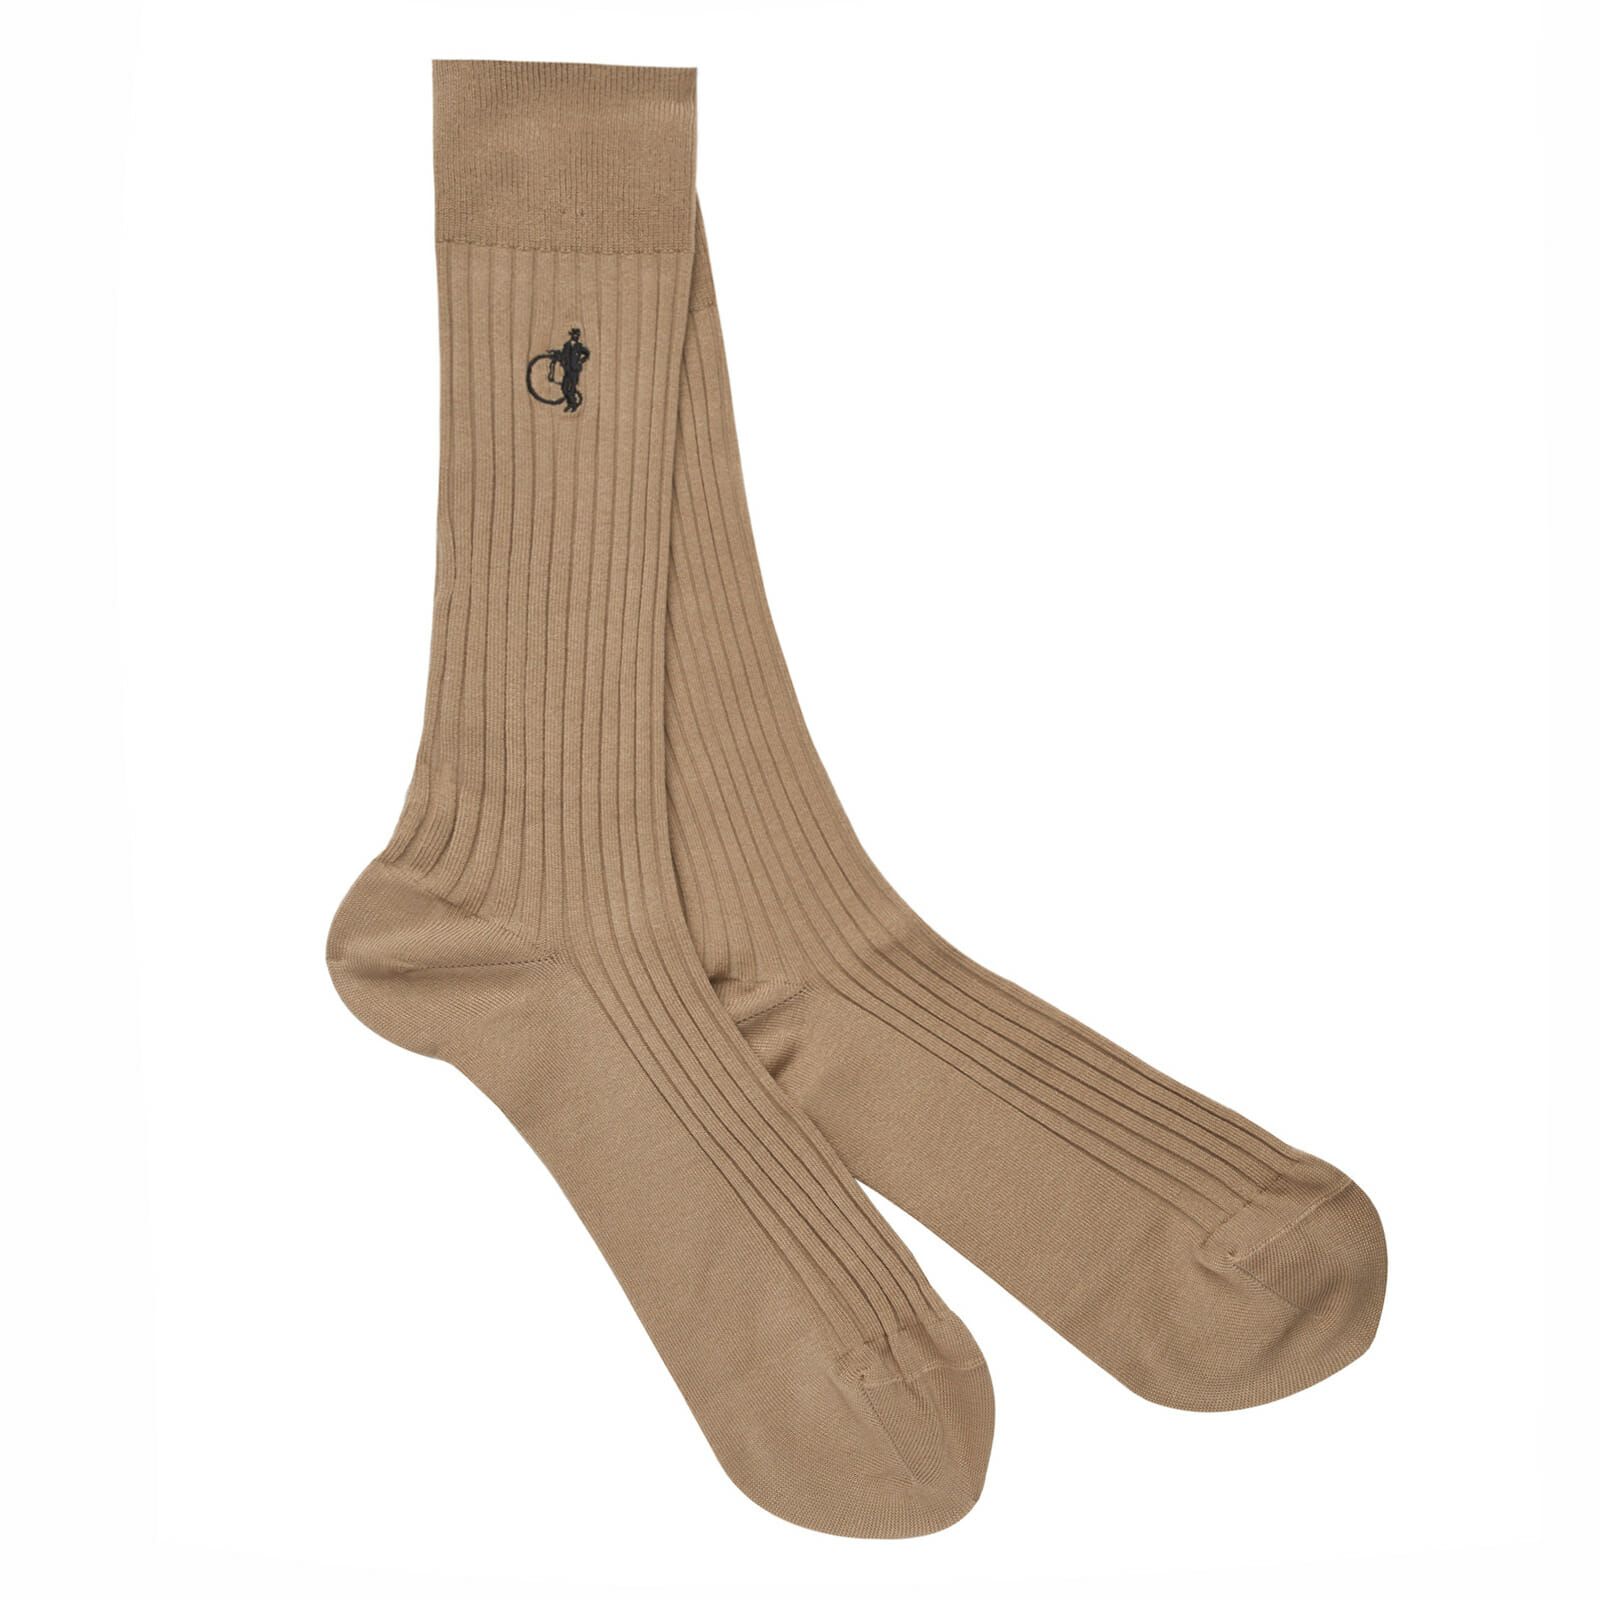 Simply Sartorial | London Sock Company